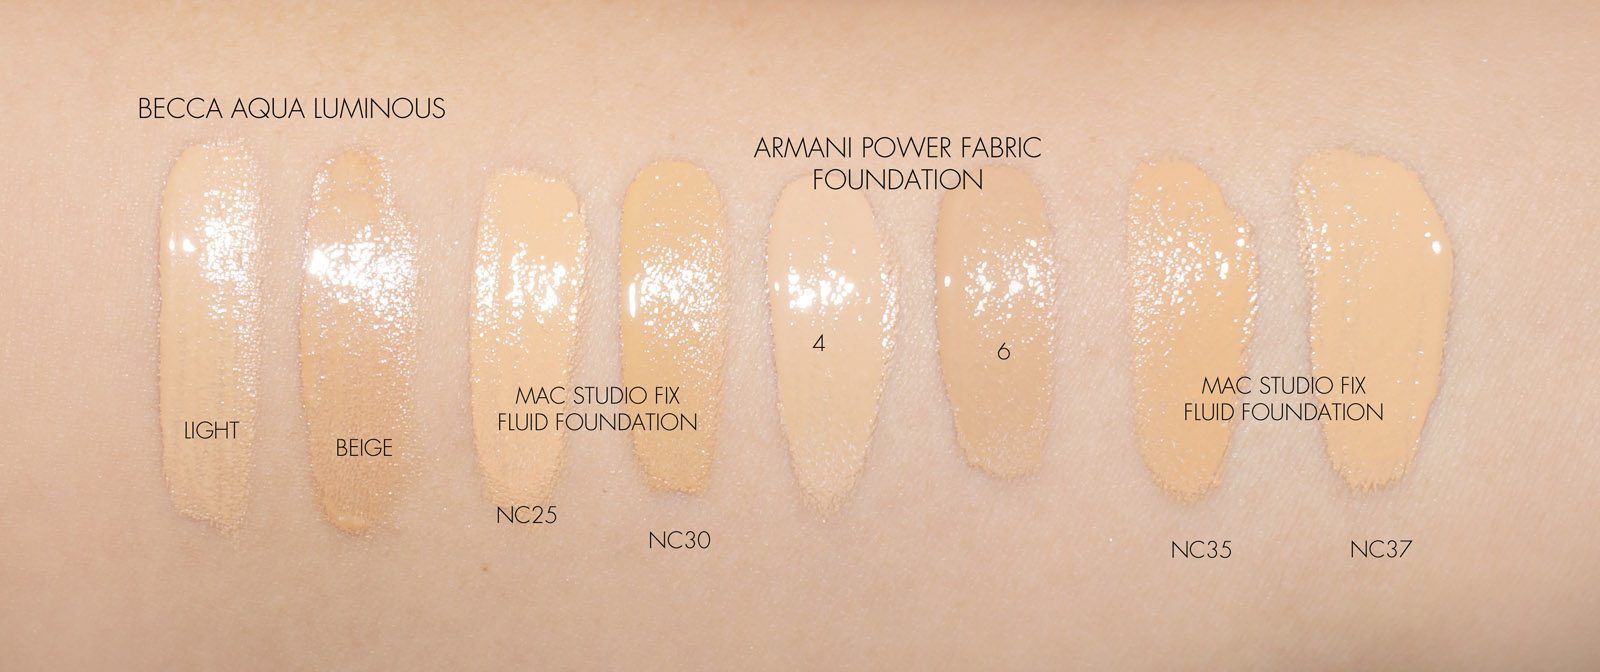 armani power fabric 5